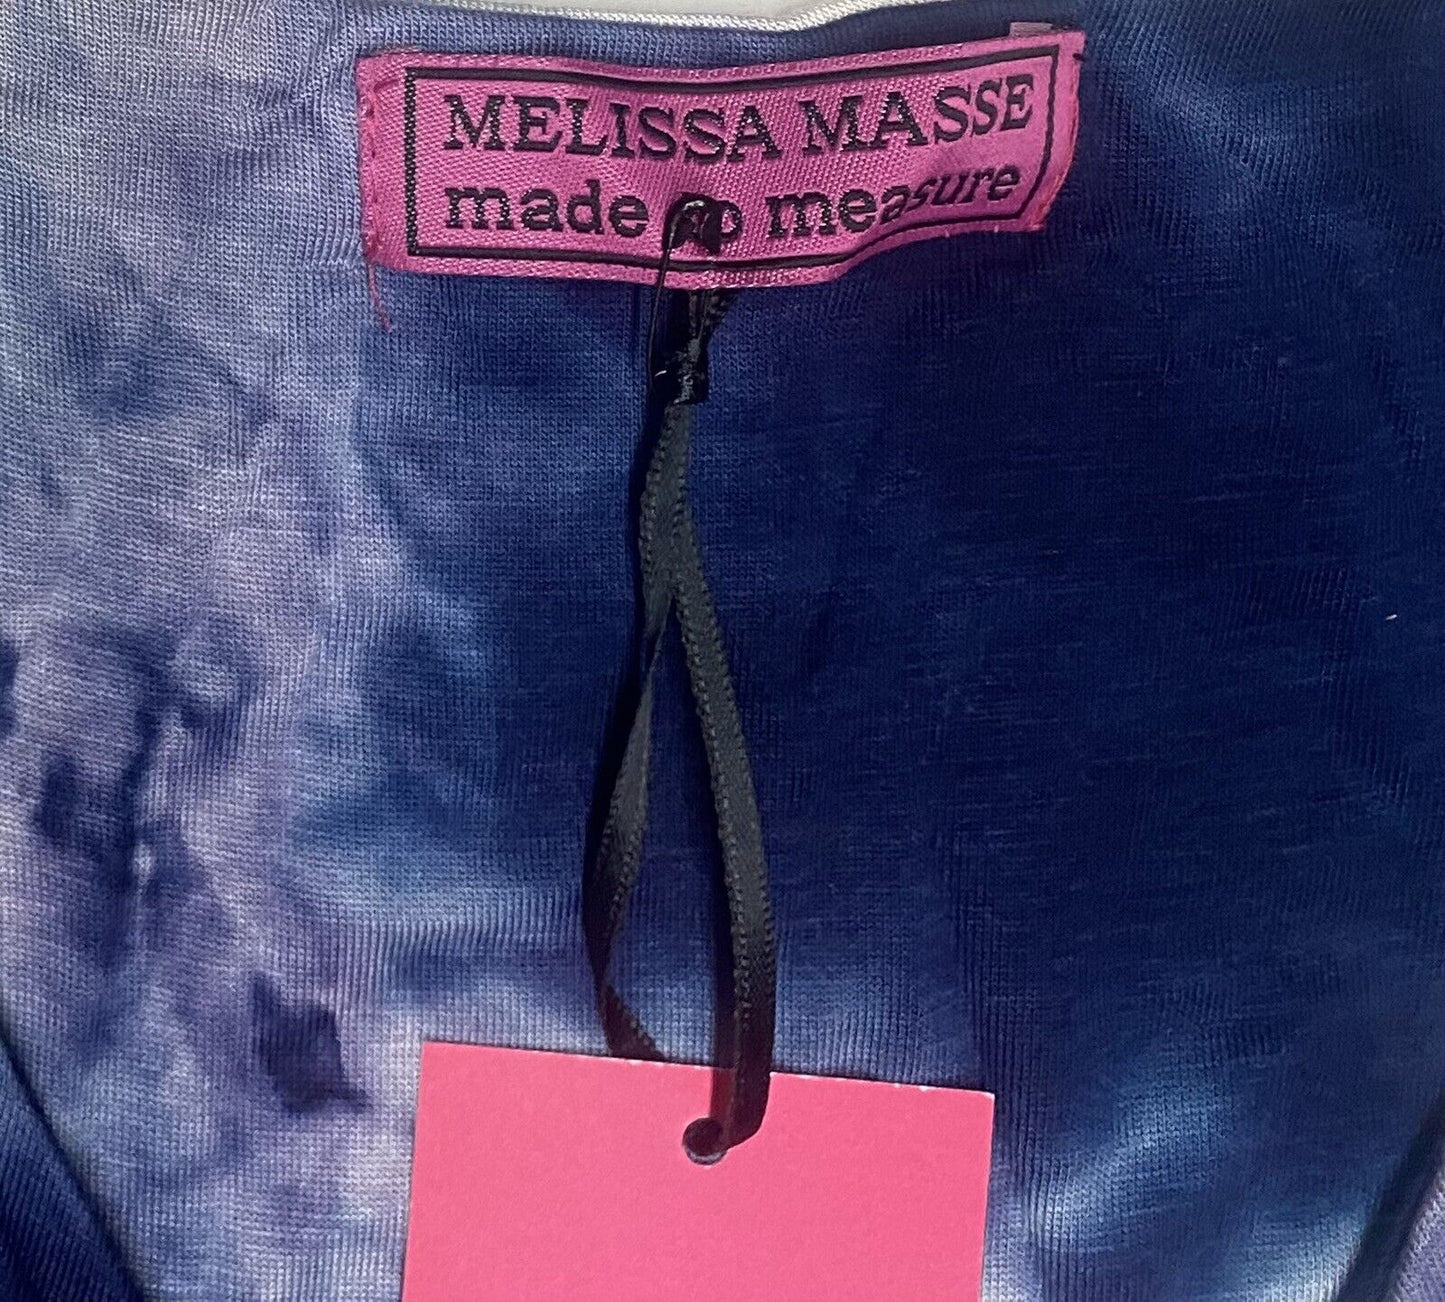 Melissa Masse V NECK MAXI DRESS IN OUR INDIGO TIE DYE JERSEY Made Ins USA